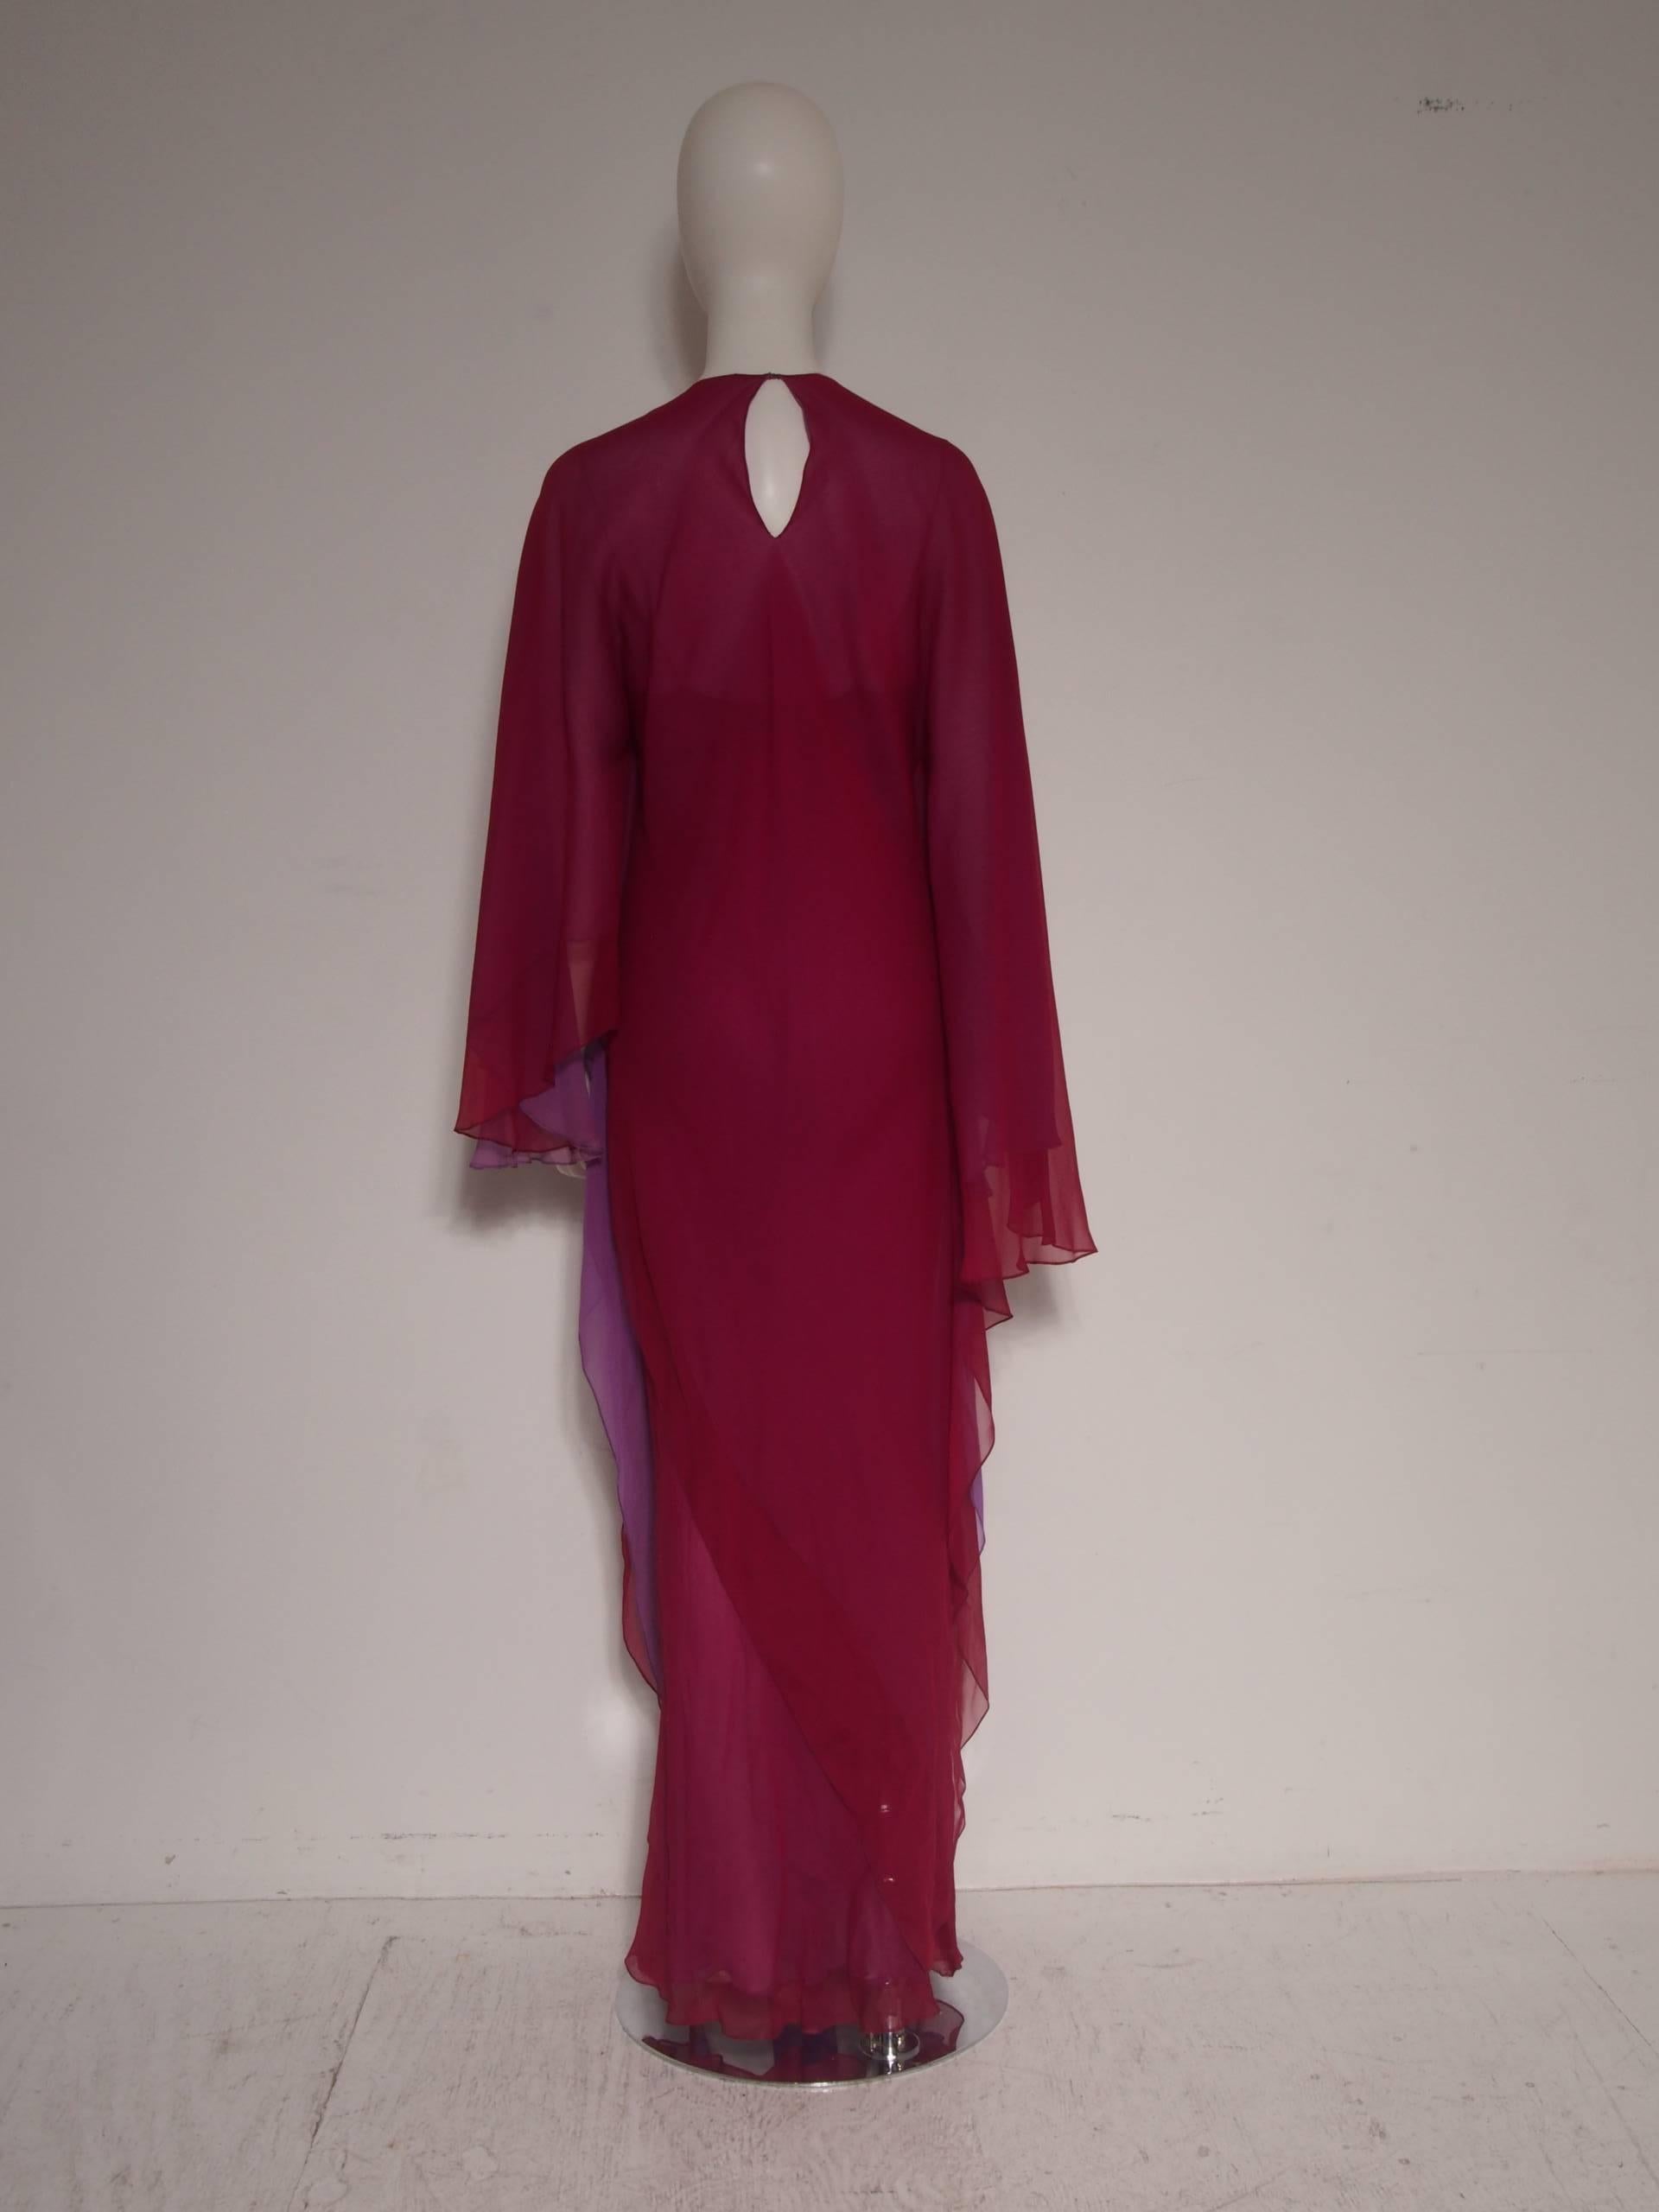 Iconic 1970s Halston maxi-slip dress and handkerchief hemline caftan set in fuchsia and amethyst.